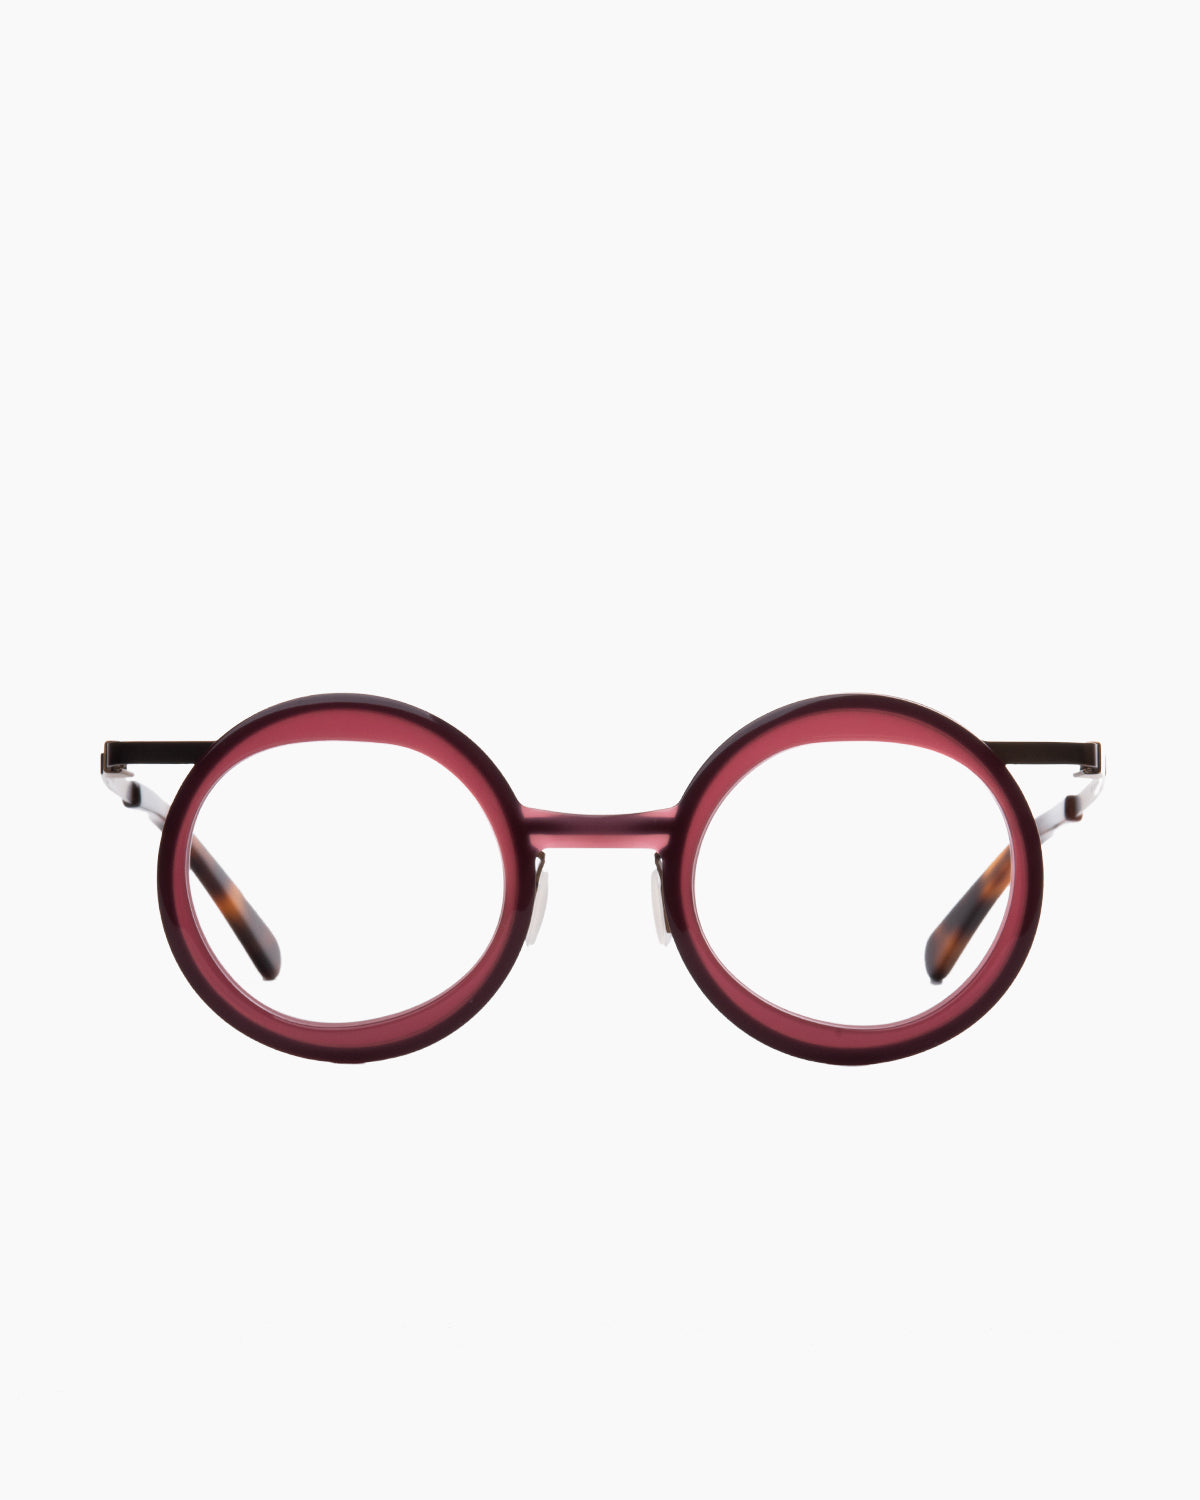 Gamine - Oculussödermalm - Rose/copper | Bar à lunettes:  Marie-Sophie Dion